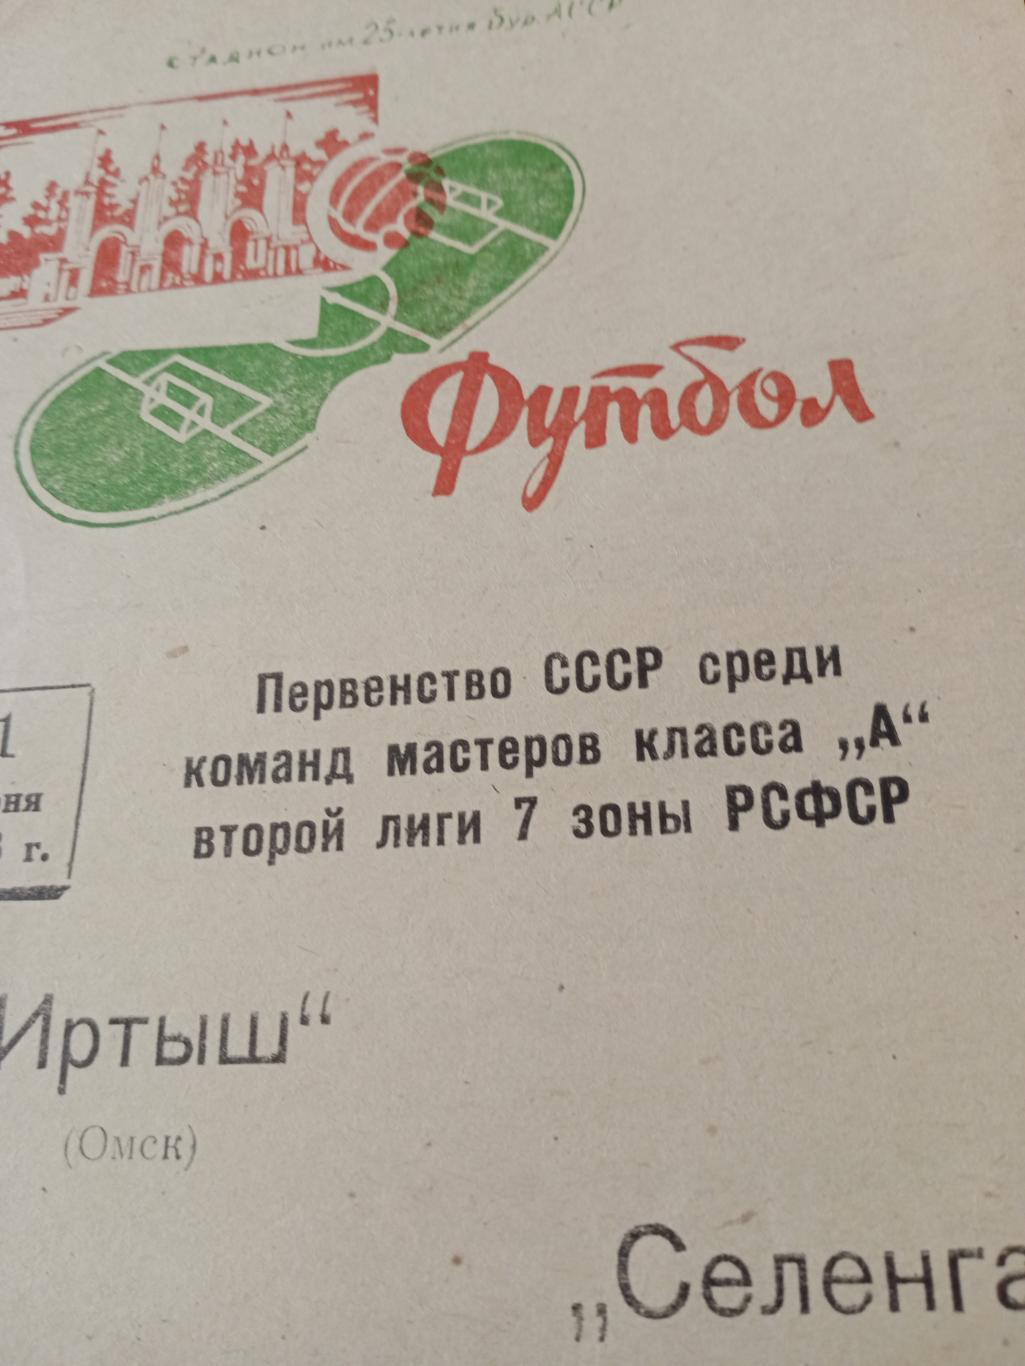 Селенга Улан-Удэ - Иртыш Омск -1.06.1973 г